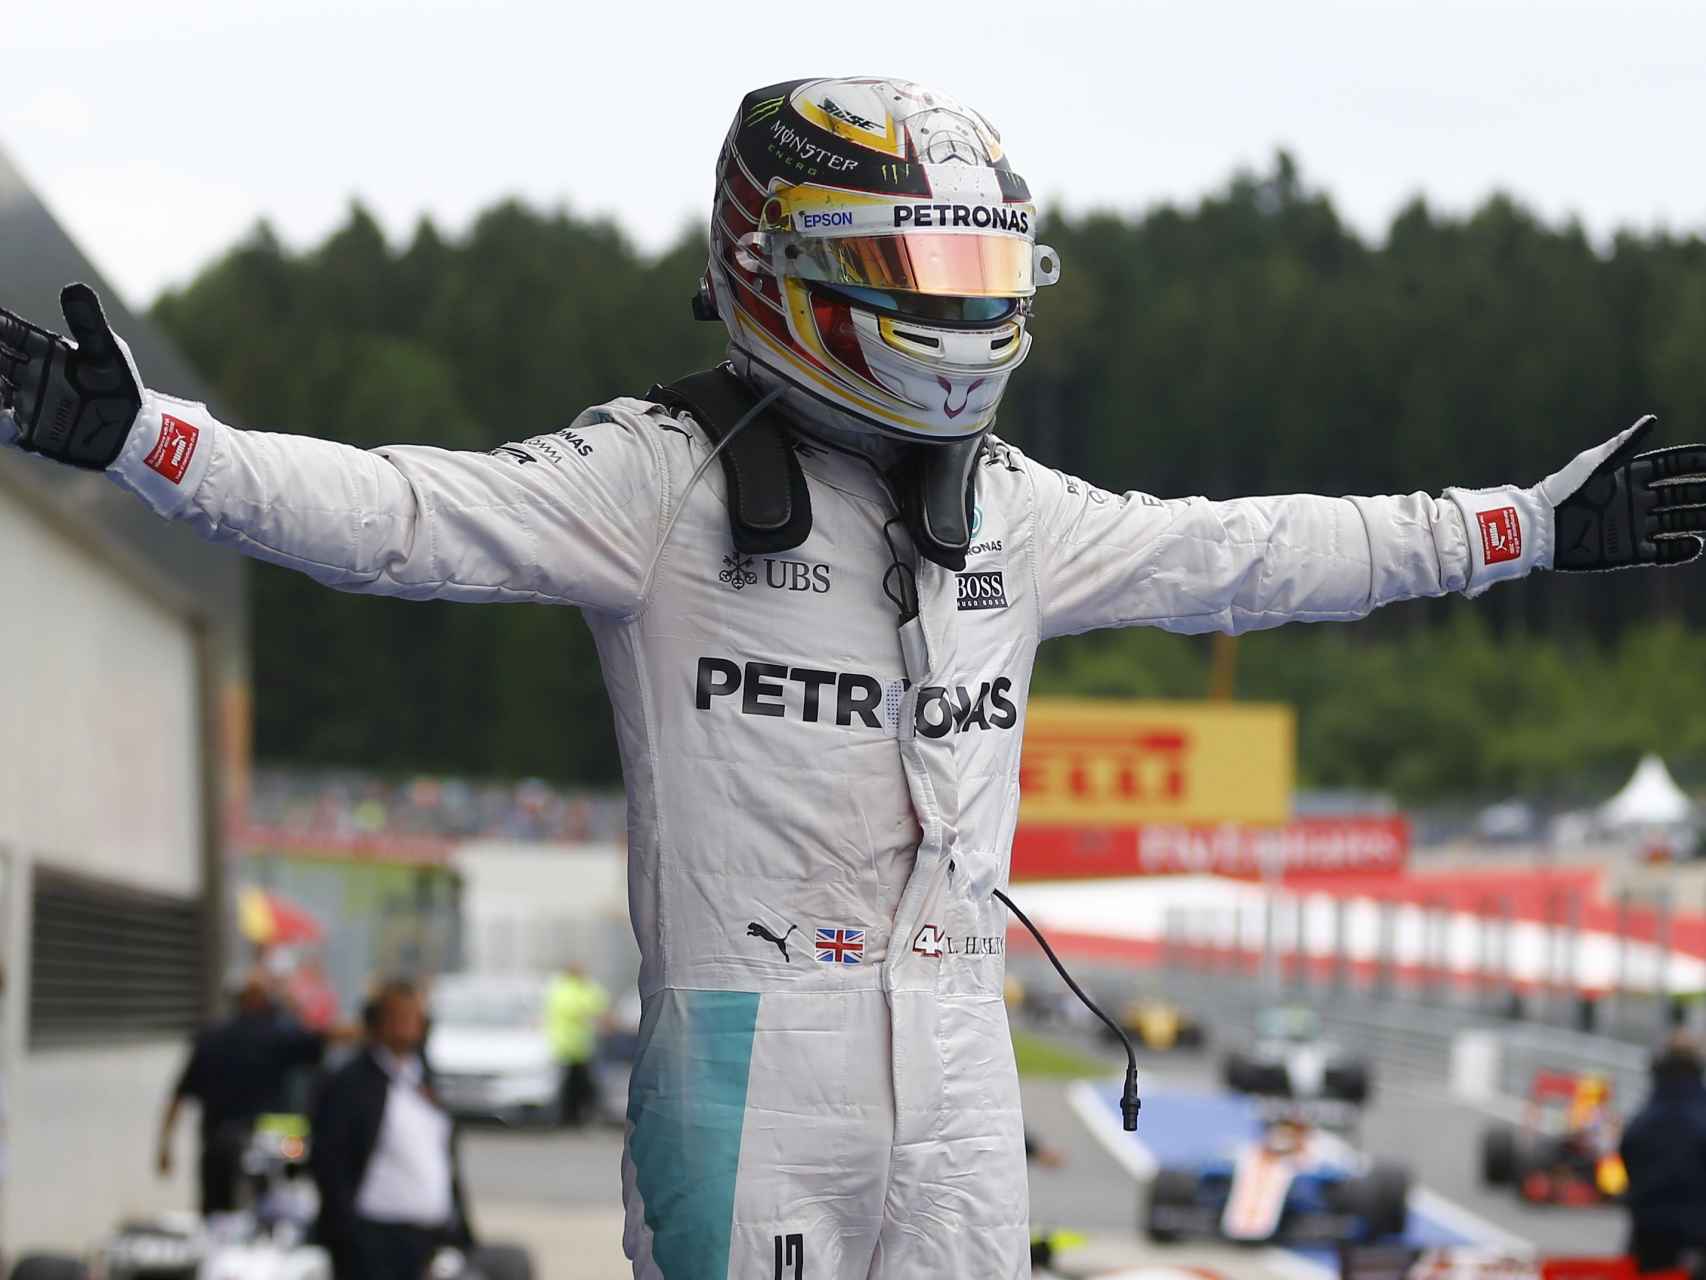 Hamilton celebra su victoria subiéndose en su coche.